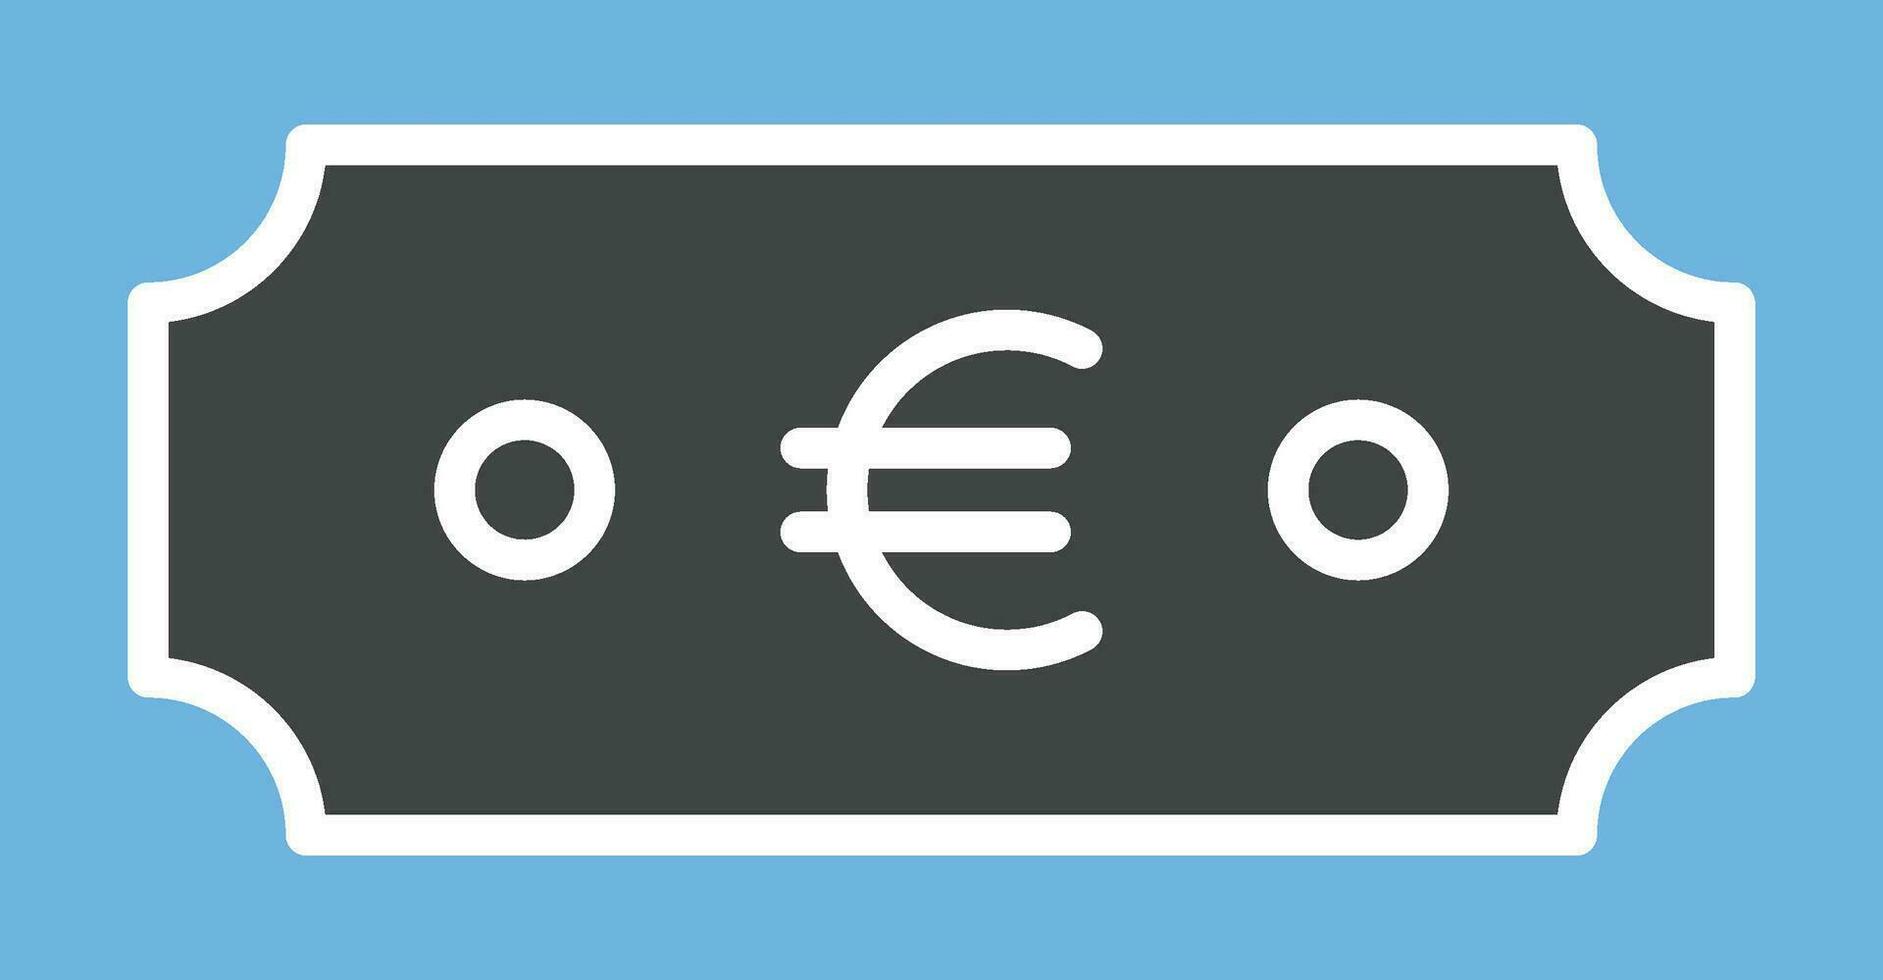 Euro Währung Symbol Vektor Bild.